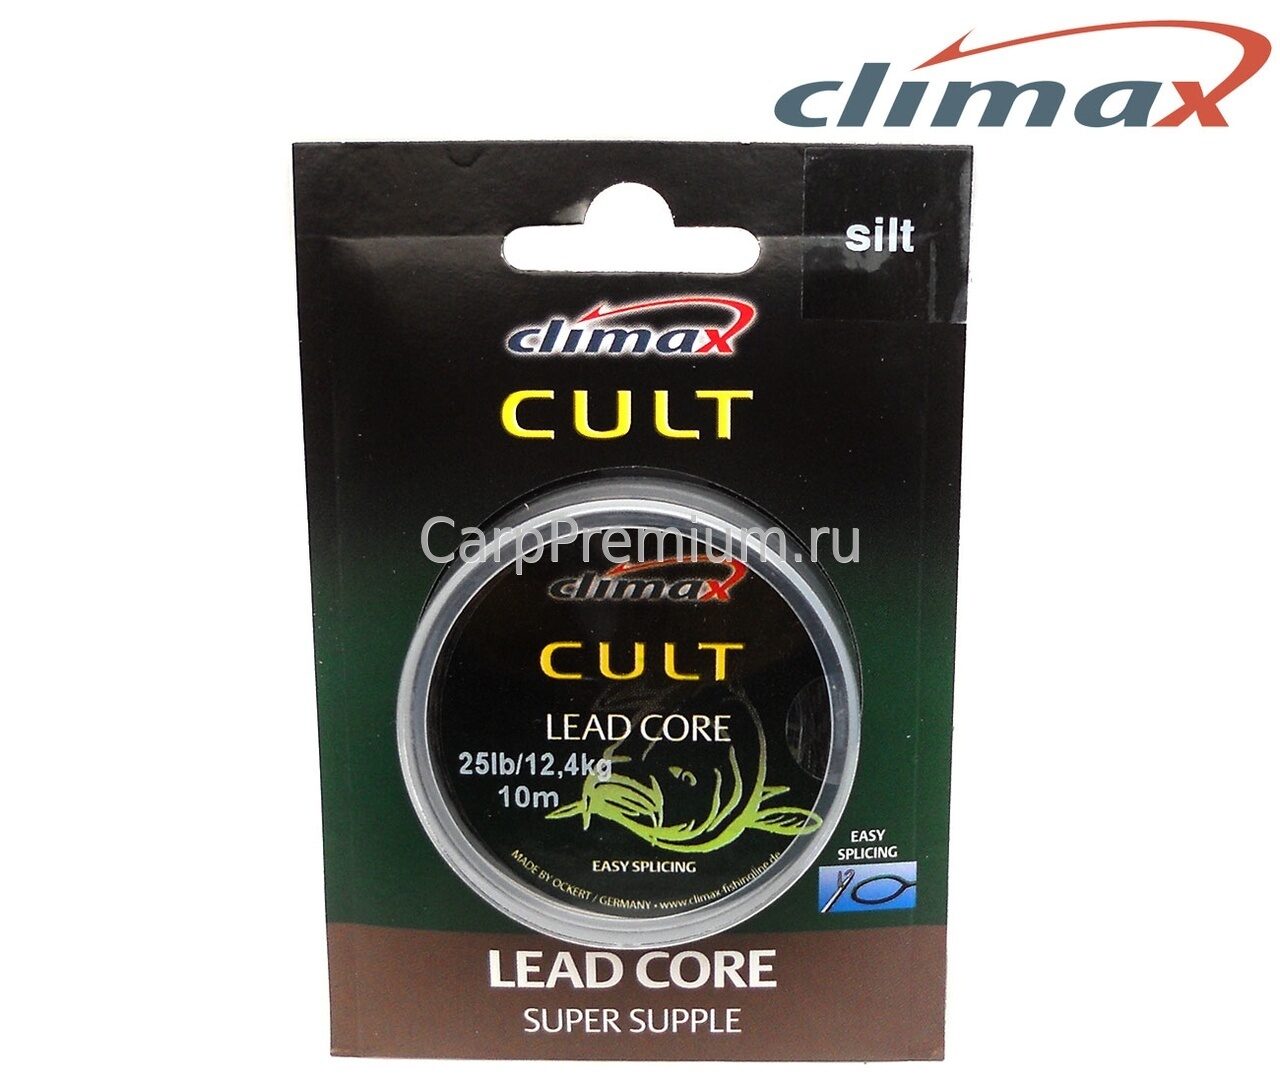 Лидкор со свинцовым стержнем Серый Сlimax (Клаймакс) - Leadcore-Super Supple Silt 12.4 кг / 25 lb, 10 м